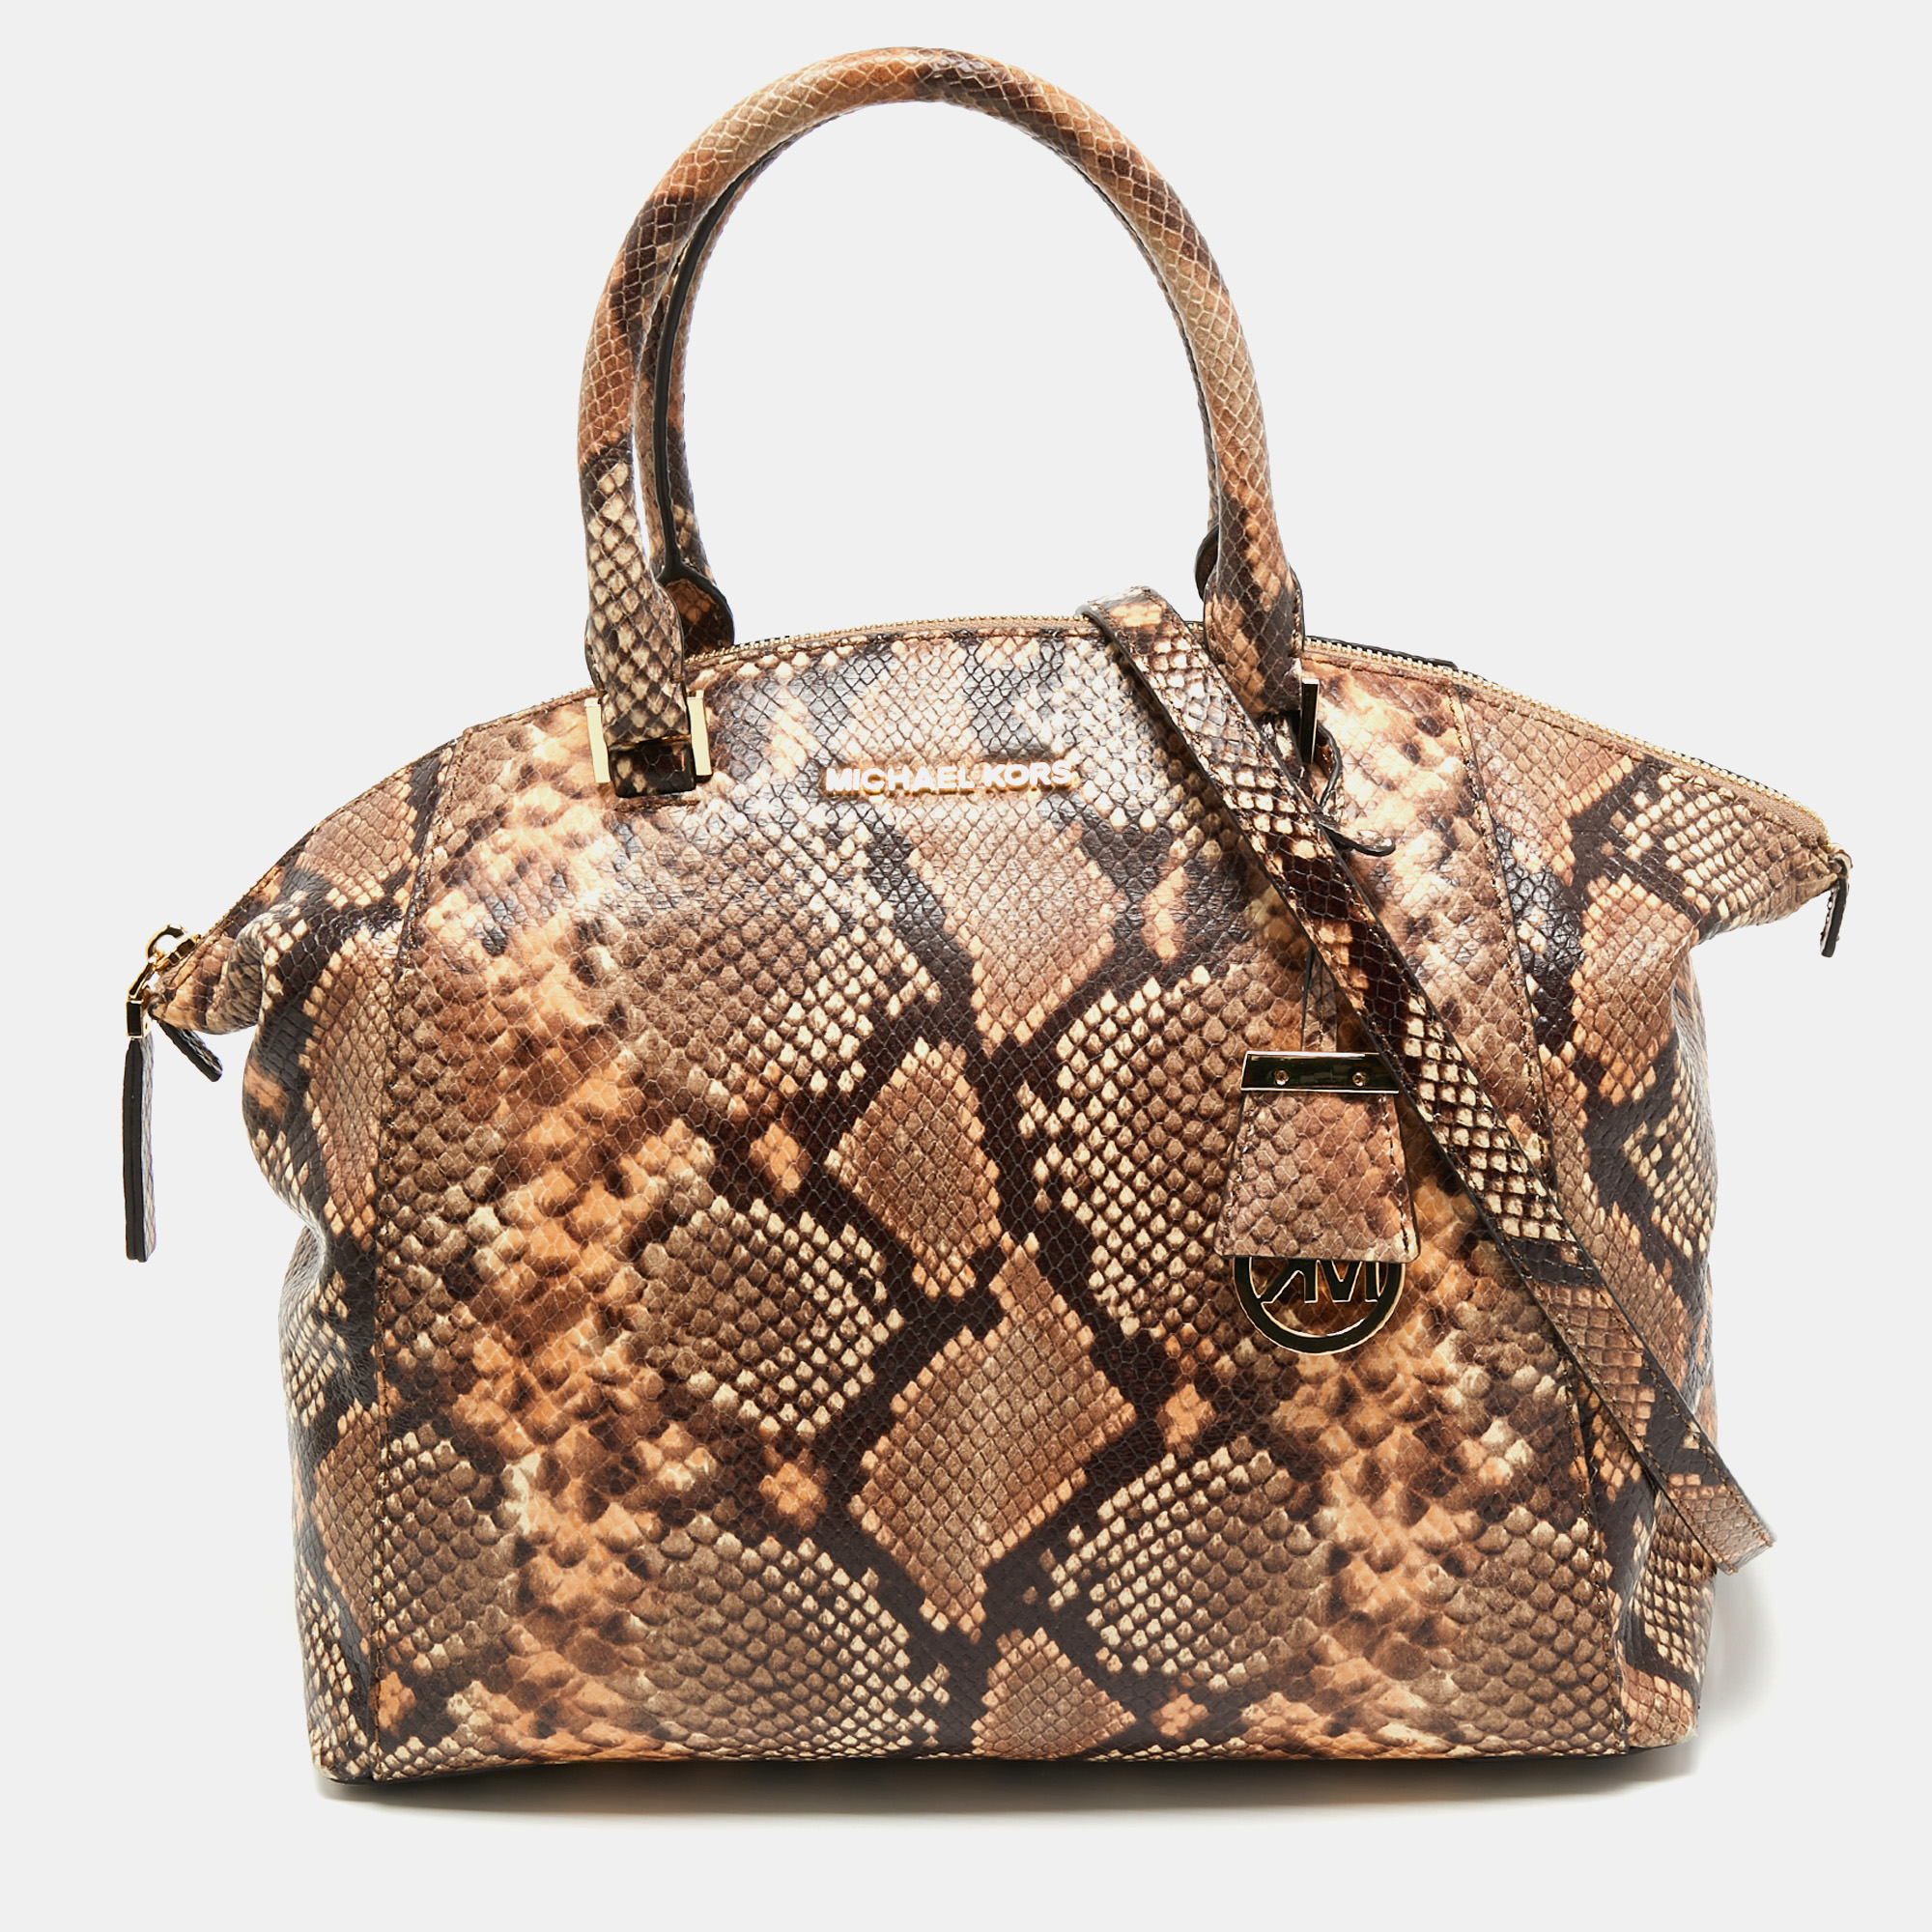 Michael kors beige/brown python embossed leather satchel